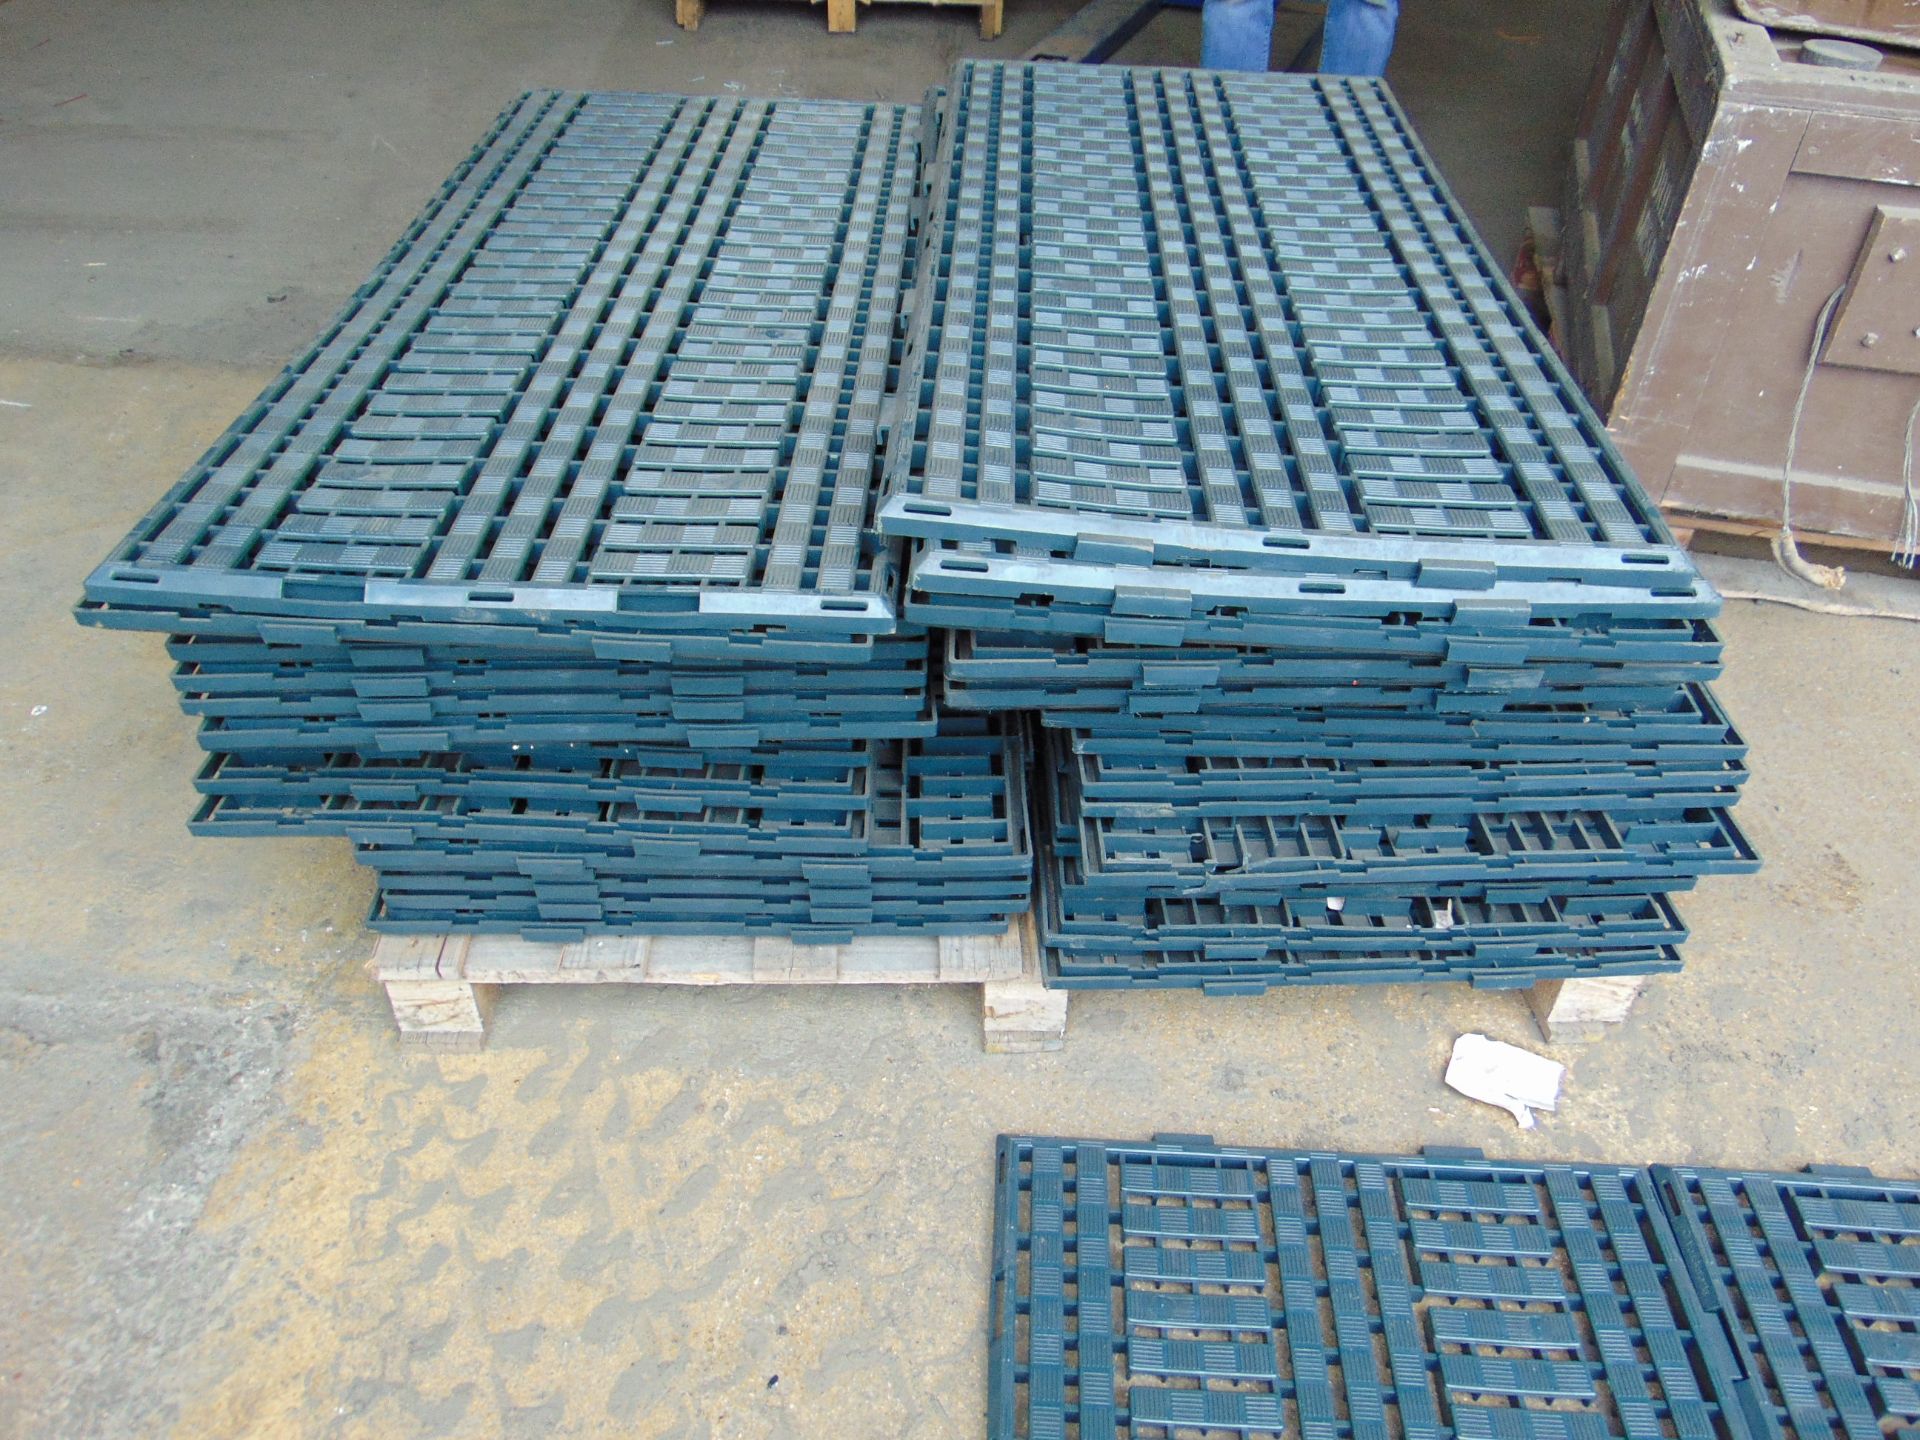 38 x Arca Systems Plastic Interlocking Flooring Sections - 120cm x 60cm - Image 4 of 5